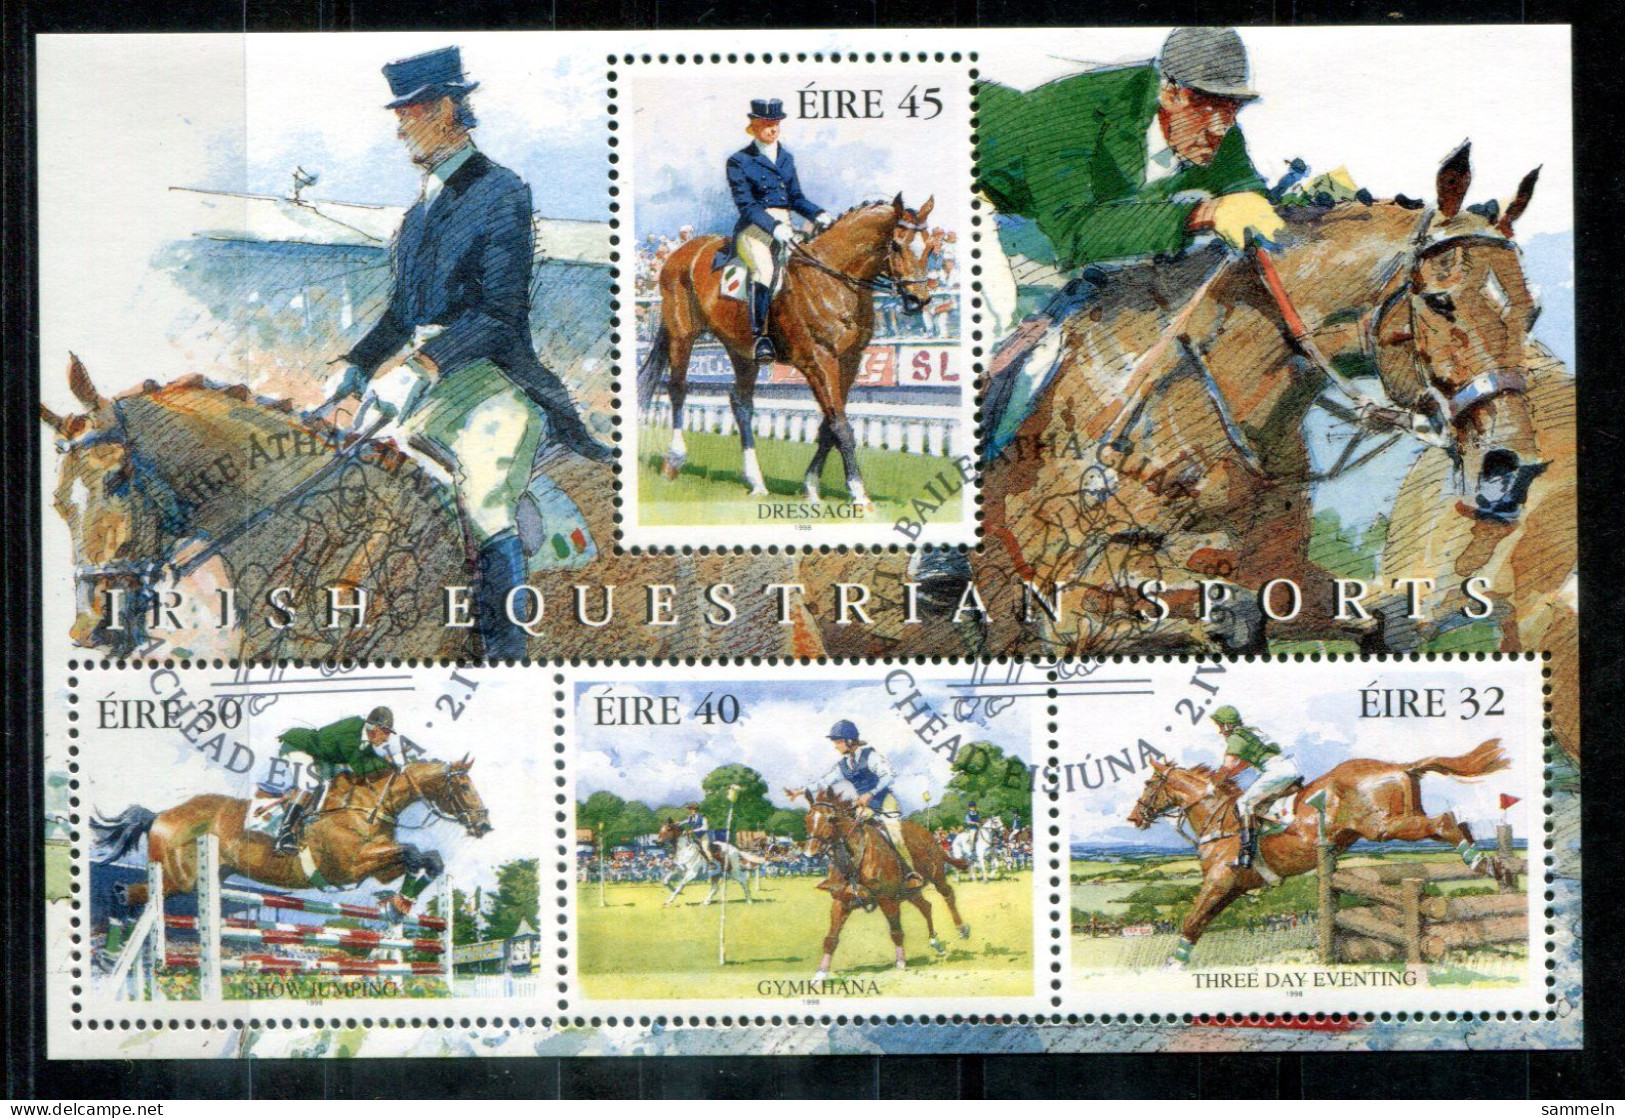 IRLAND Block 27, Bl.27 Canc. - Reitsport, Equestrian, Sport équestre, Pferd, Horse, Cheval   - IRELAND / IRLANDE - Blocks & Sheetlets